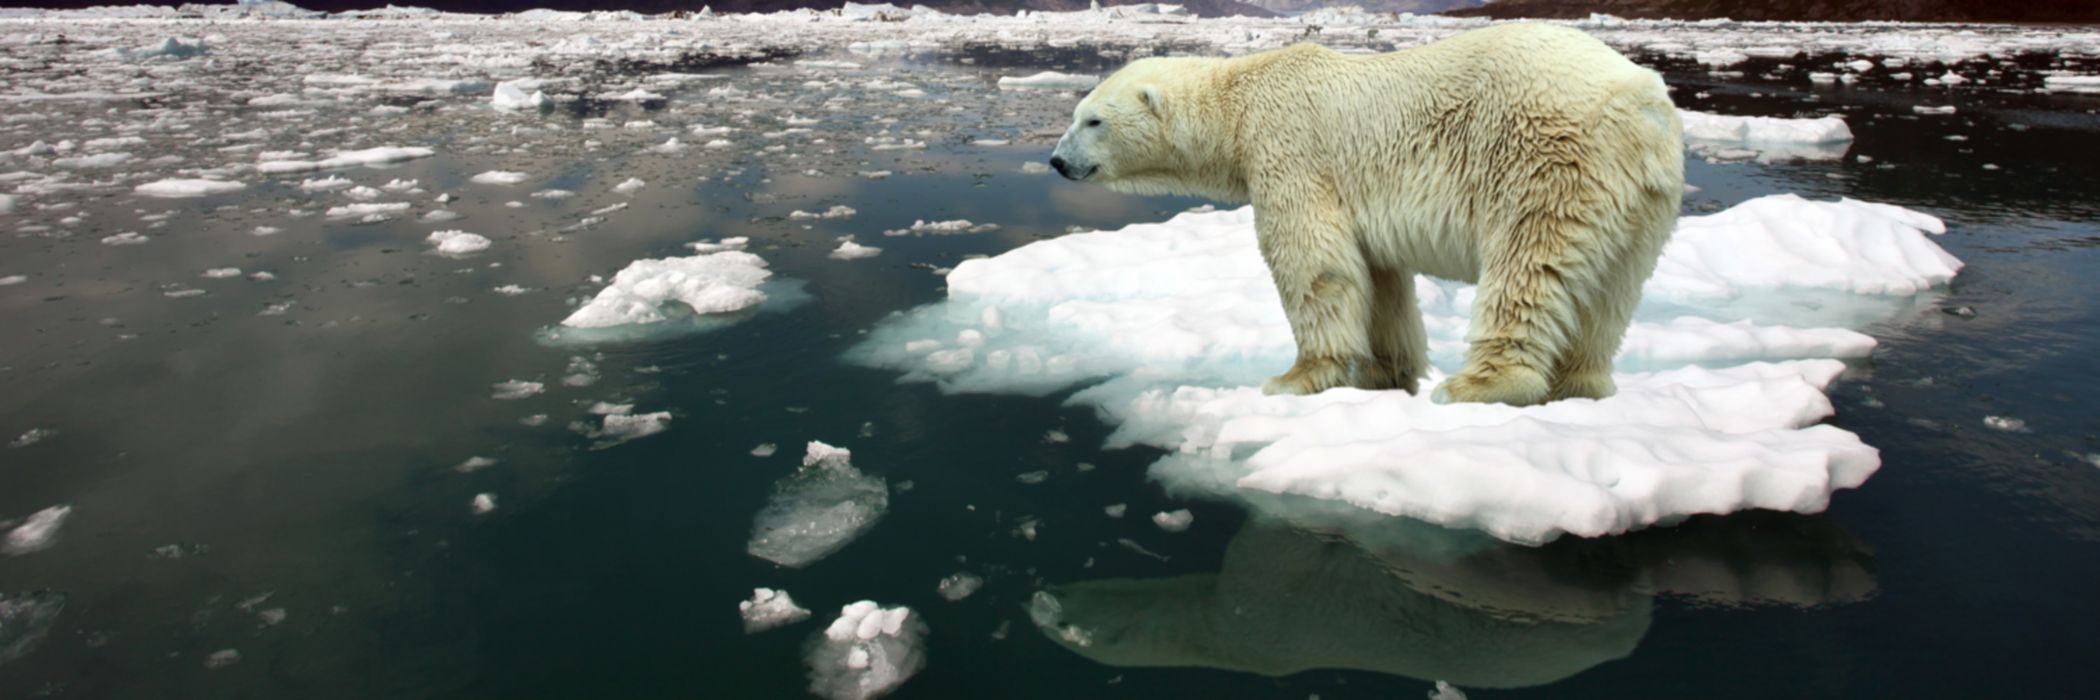 Polar bear standing on an iceberg